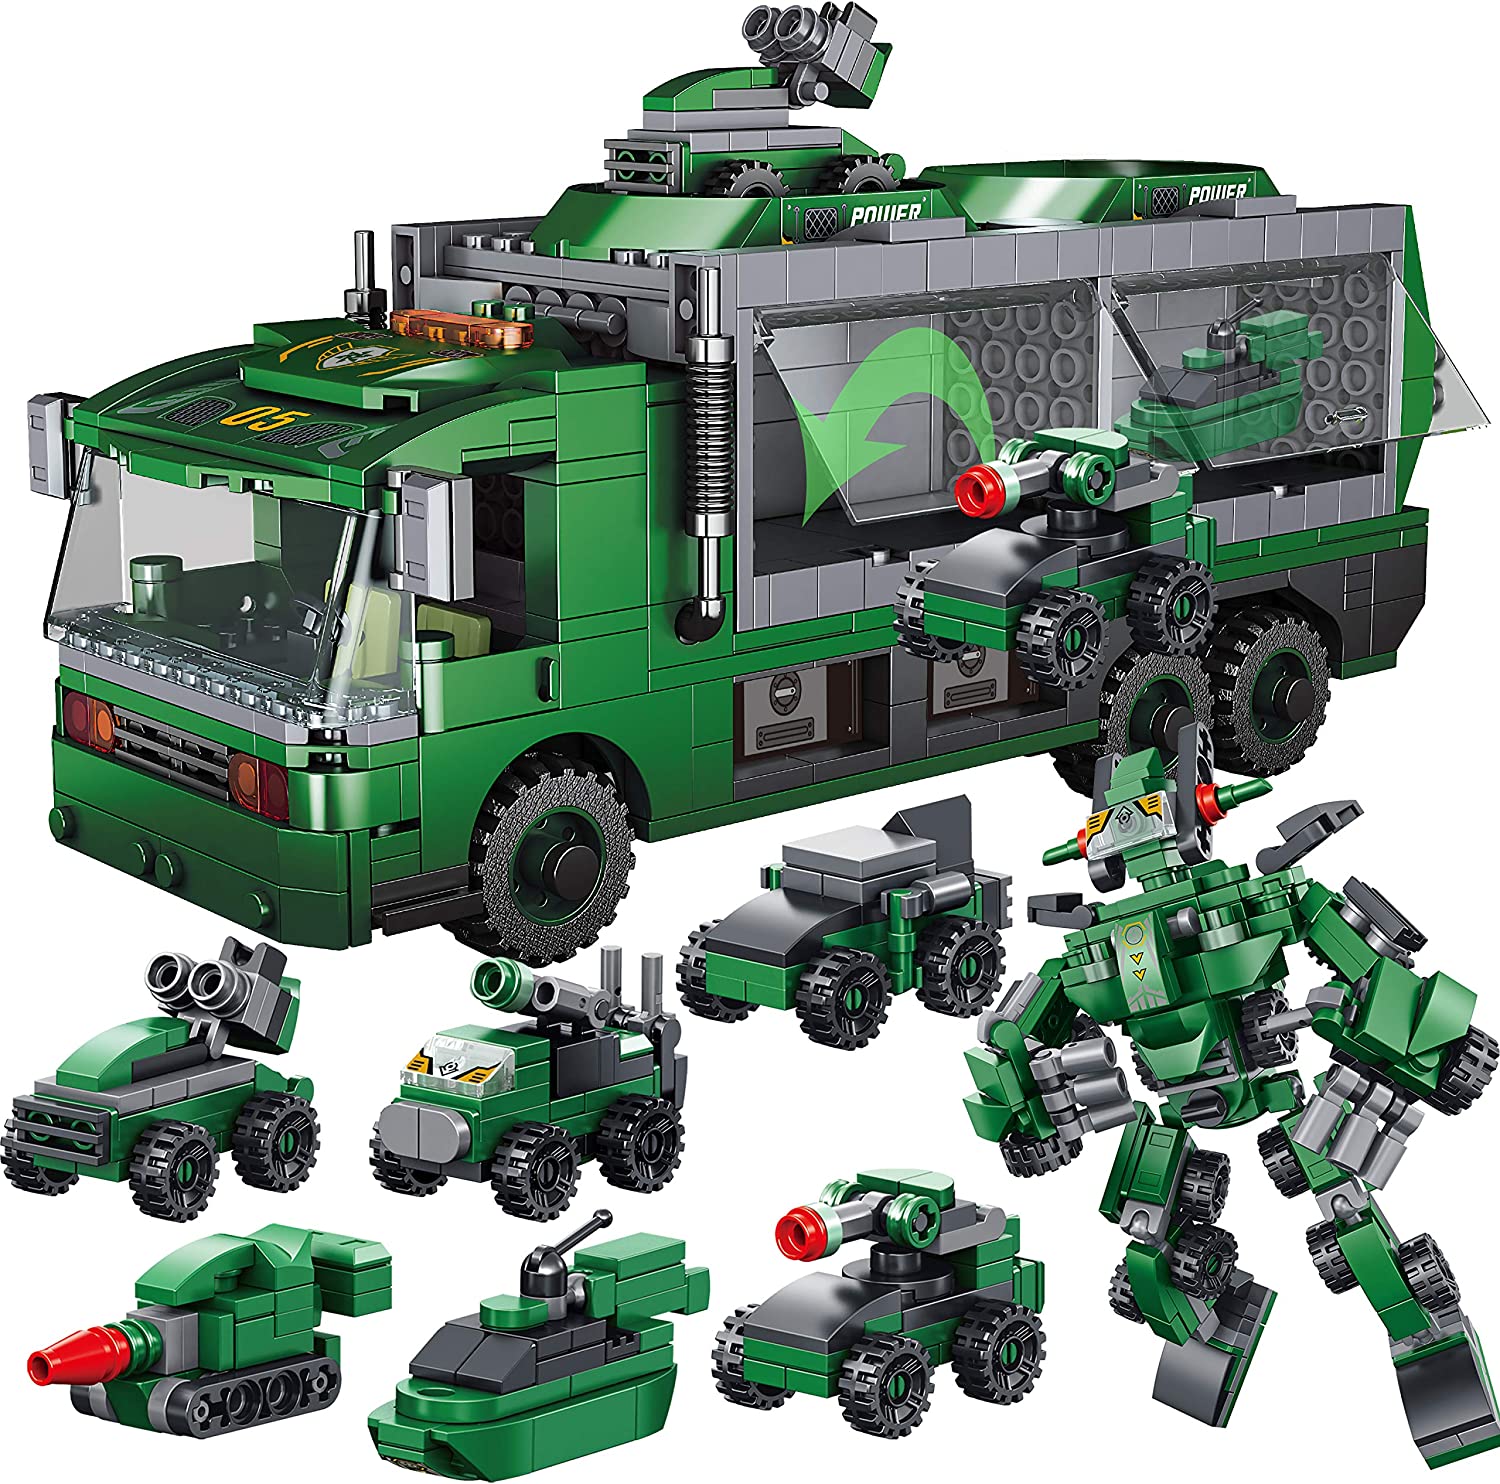 Joyin | Stem Building Toys For Kids, 6-in-1 Army Car Carrier Truck